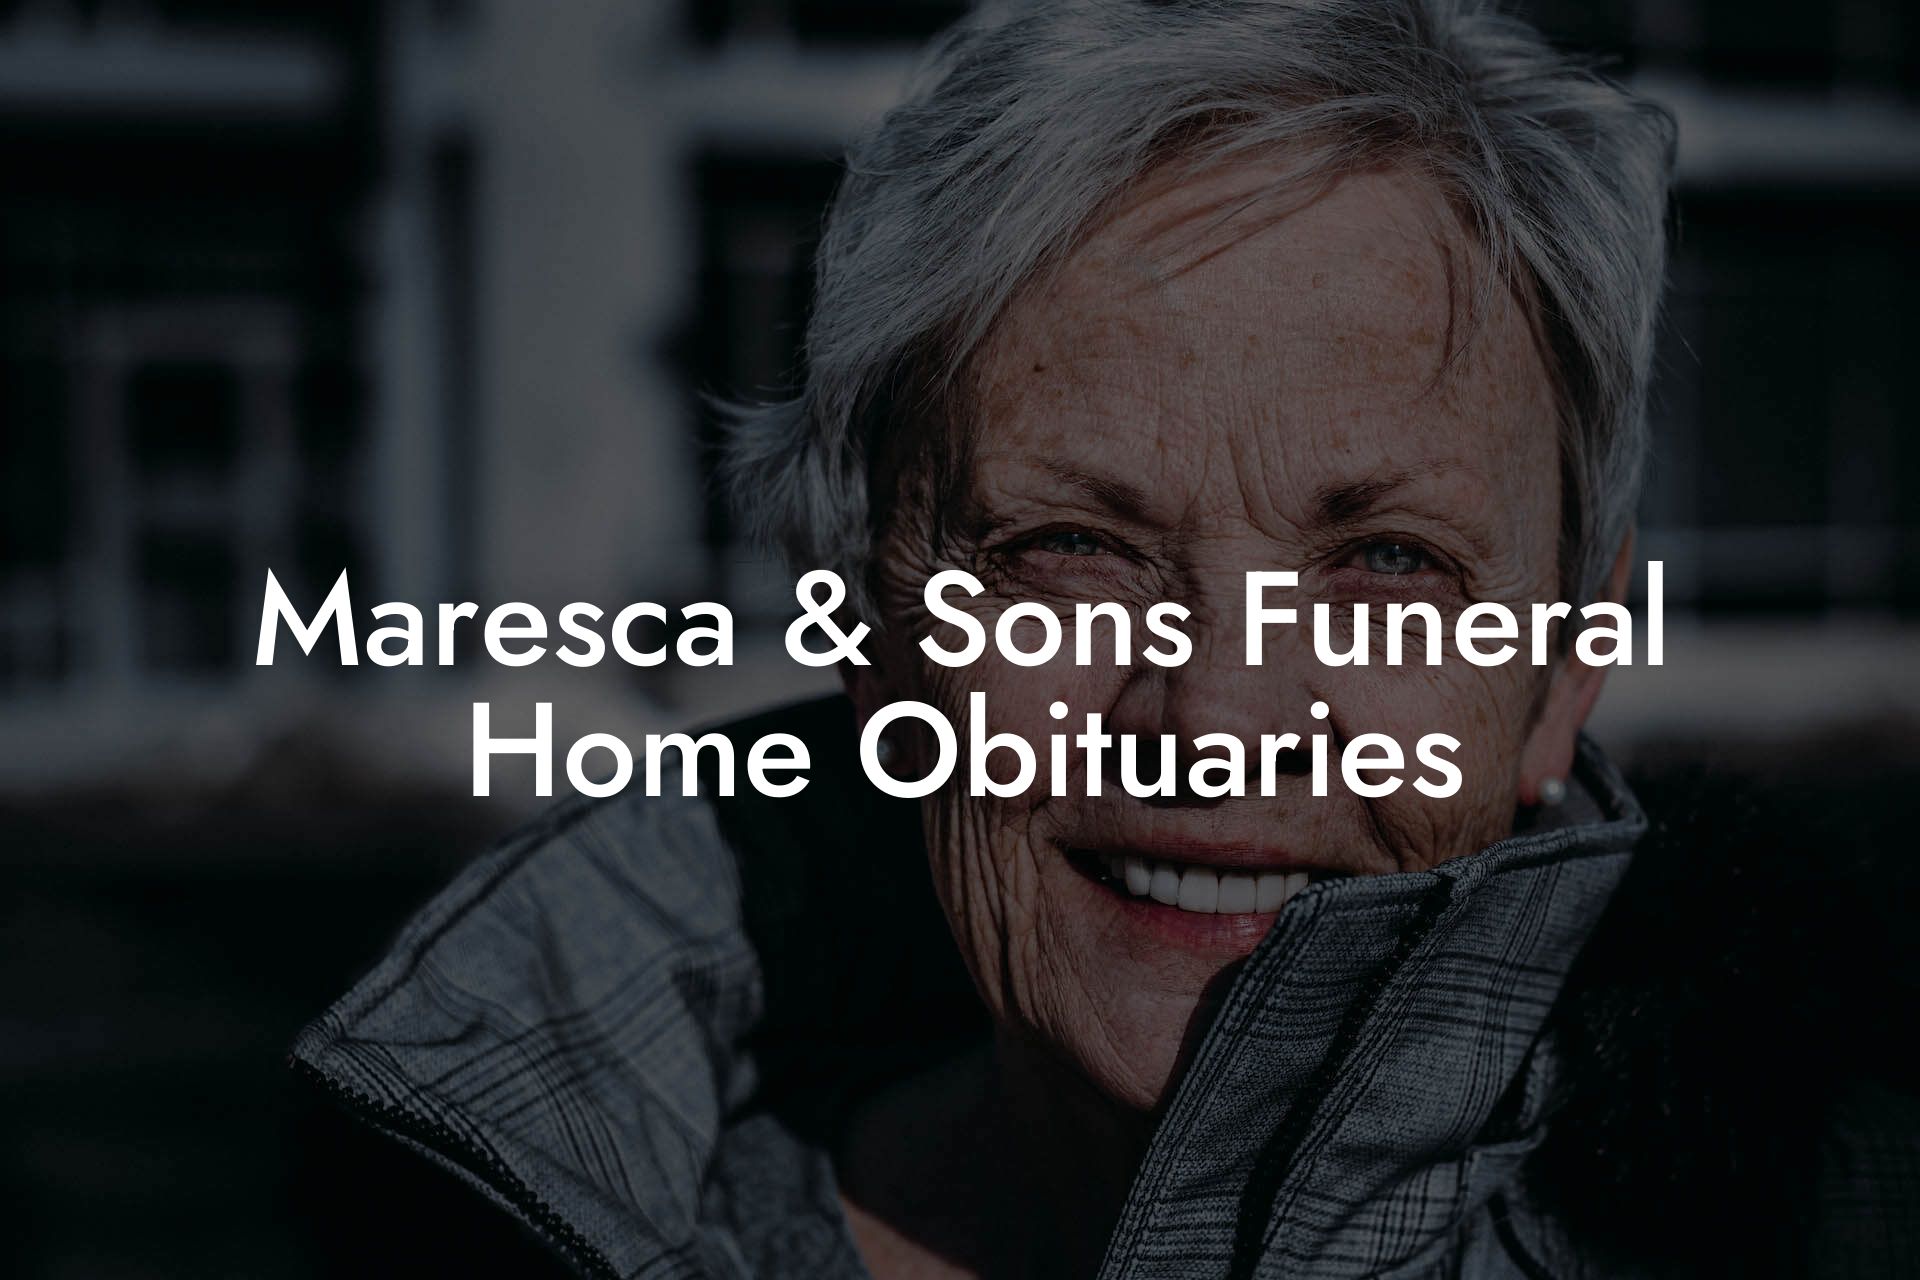 Maresca & Sons Funeral Home Obituaries